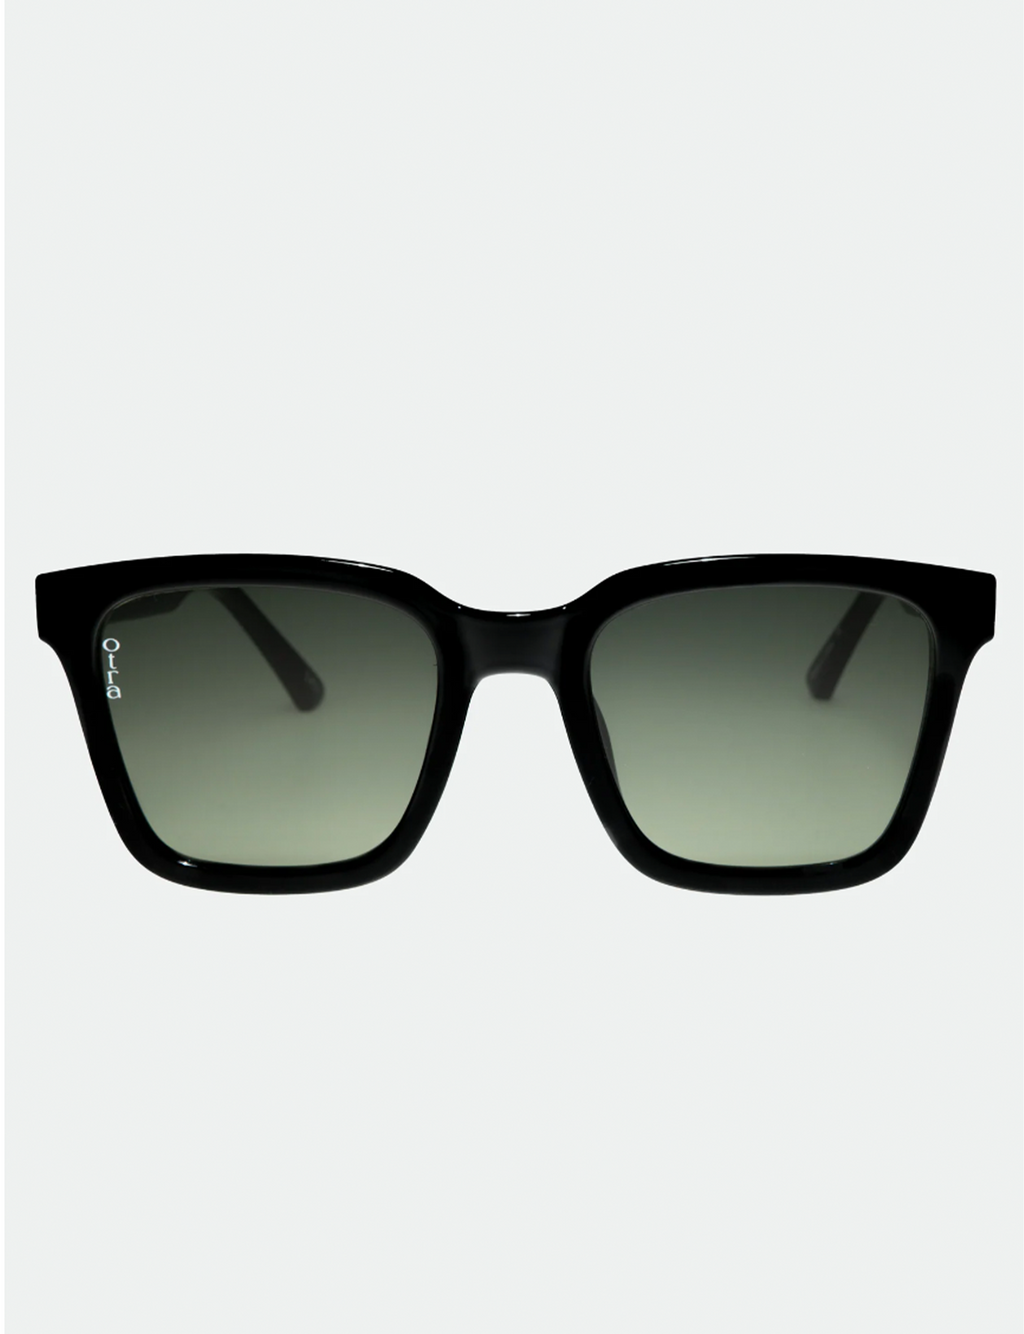 Fyn Sunglasses, Black/Green